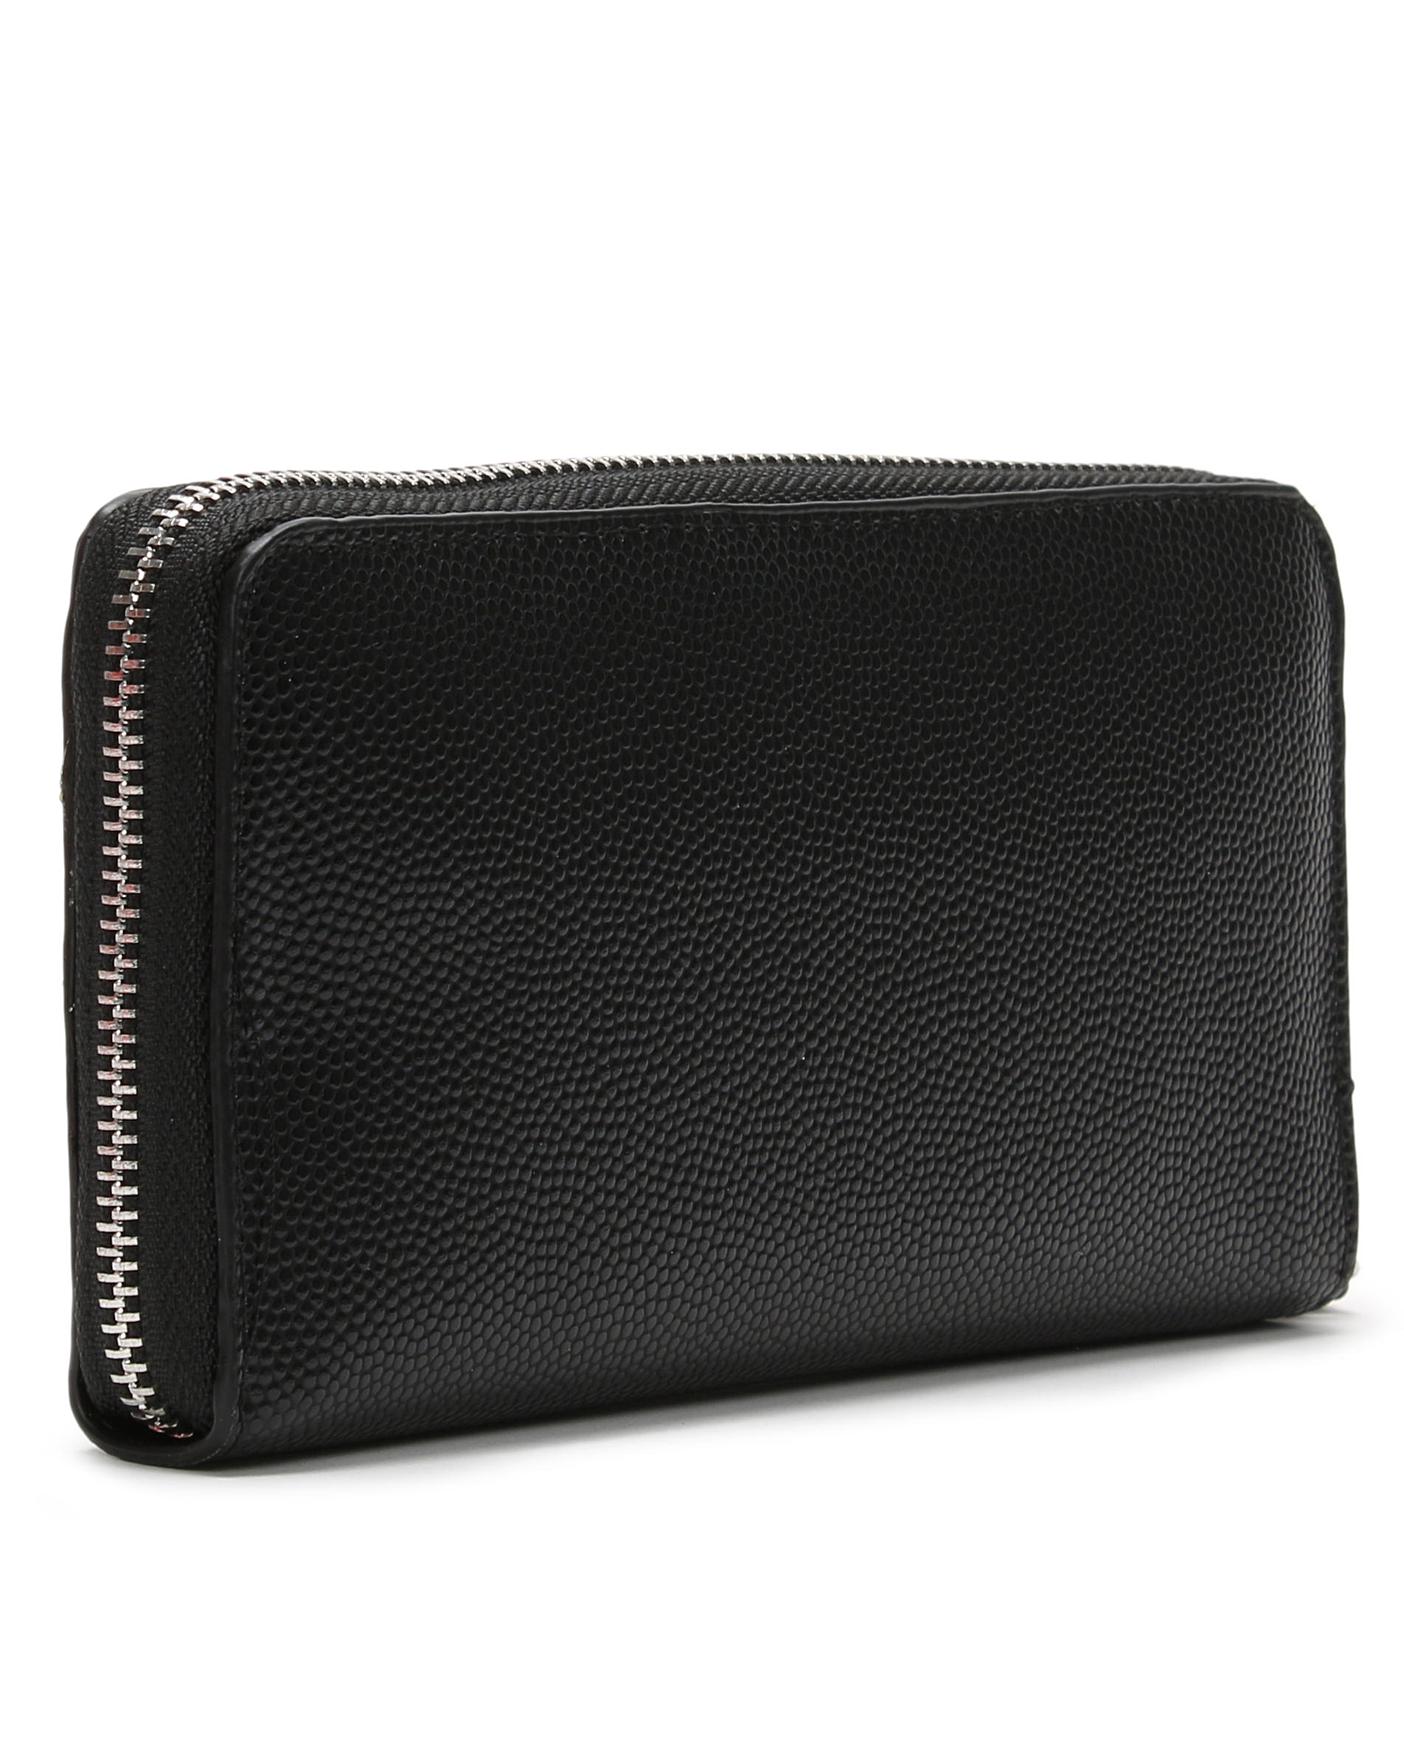 Valentino Bags Divina Zip Around Wallet | J D Williams